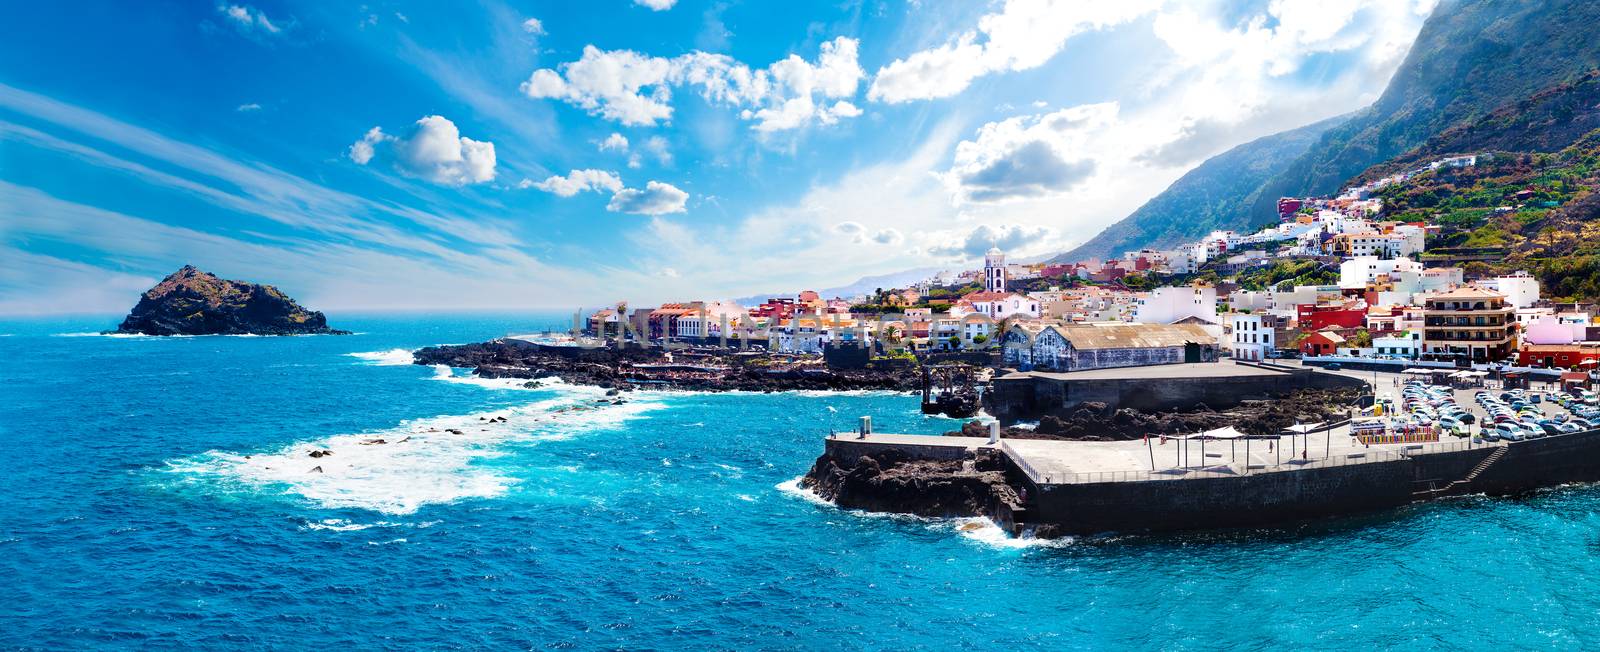 Tenerife island scenery.Ocean and beautiful stone,Garachico beac by carloscastilla